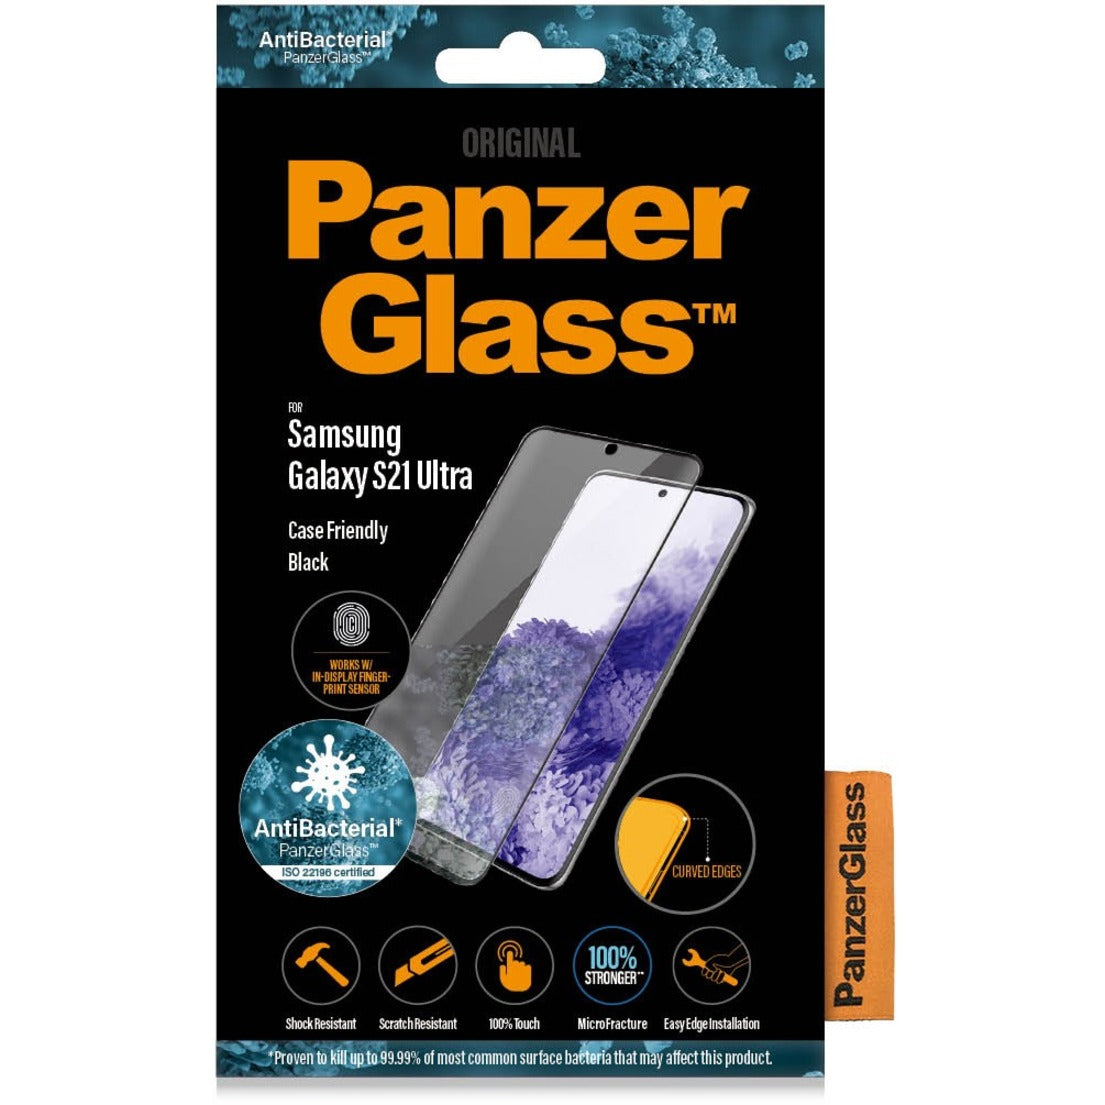 PanzerGlass 7258 Screen Protector, Transparent, Black, Oleophobic Coating, Rounded Edge, Anti-bacterial